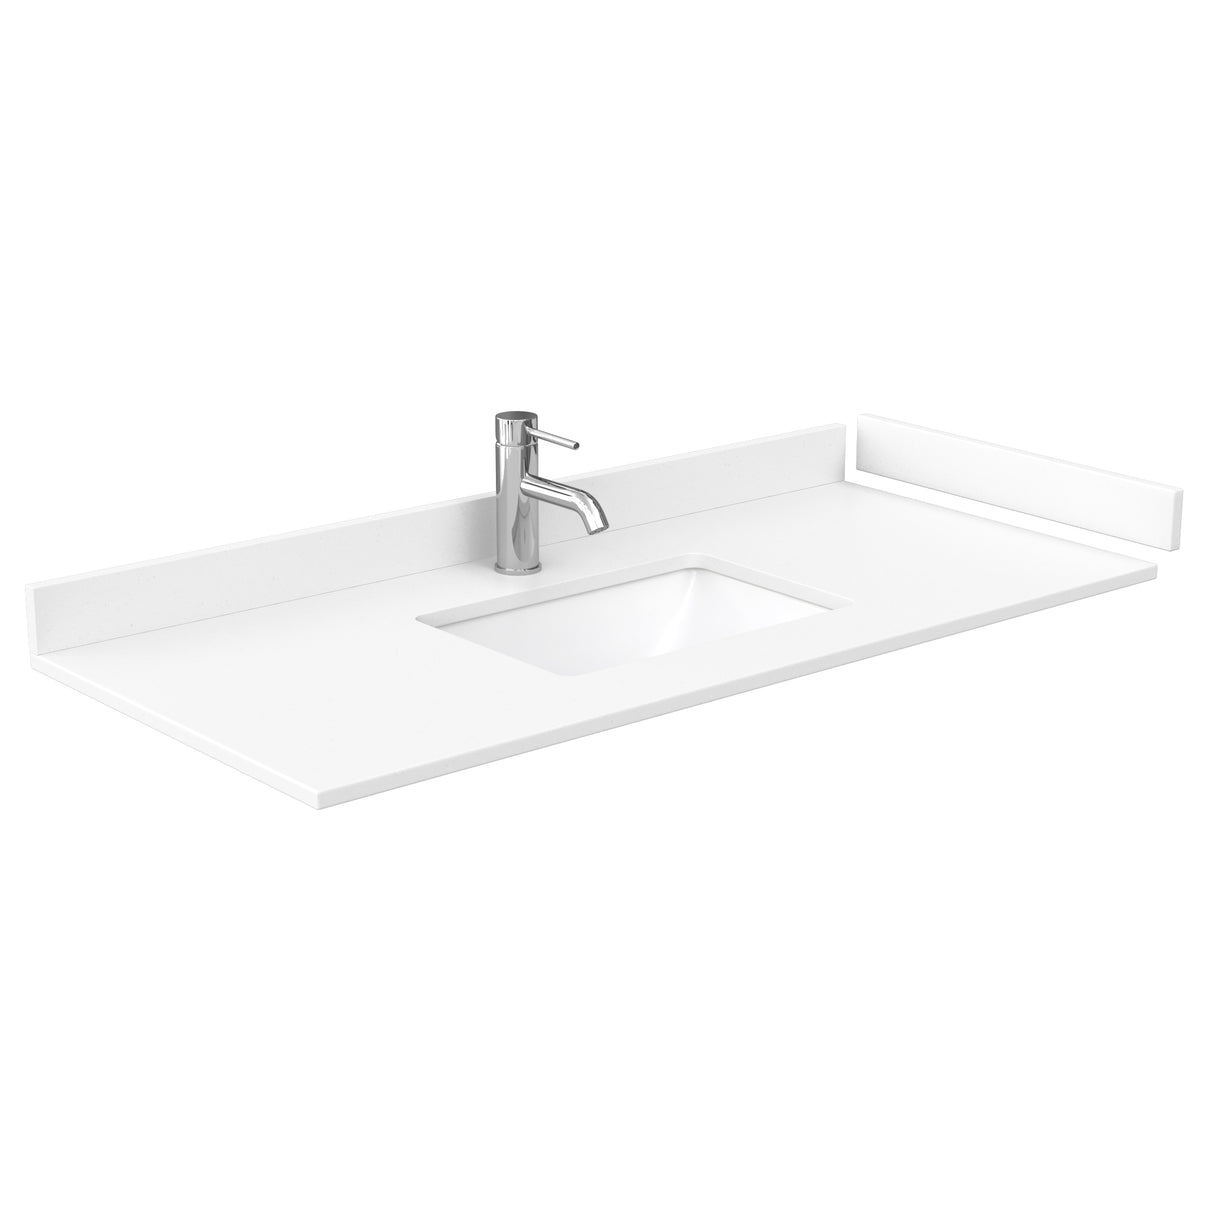 Daria 48 Inch Single Bathroom Vanity in White White Cultured Marble Countertop Undermount Square Sink Matte Black Trim